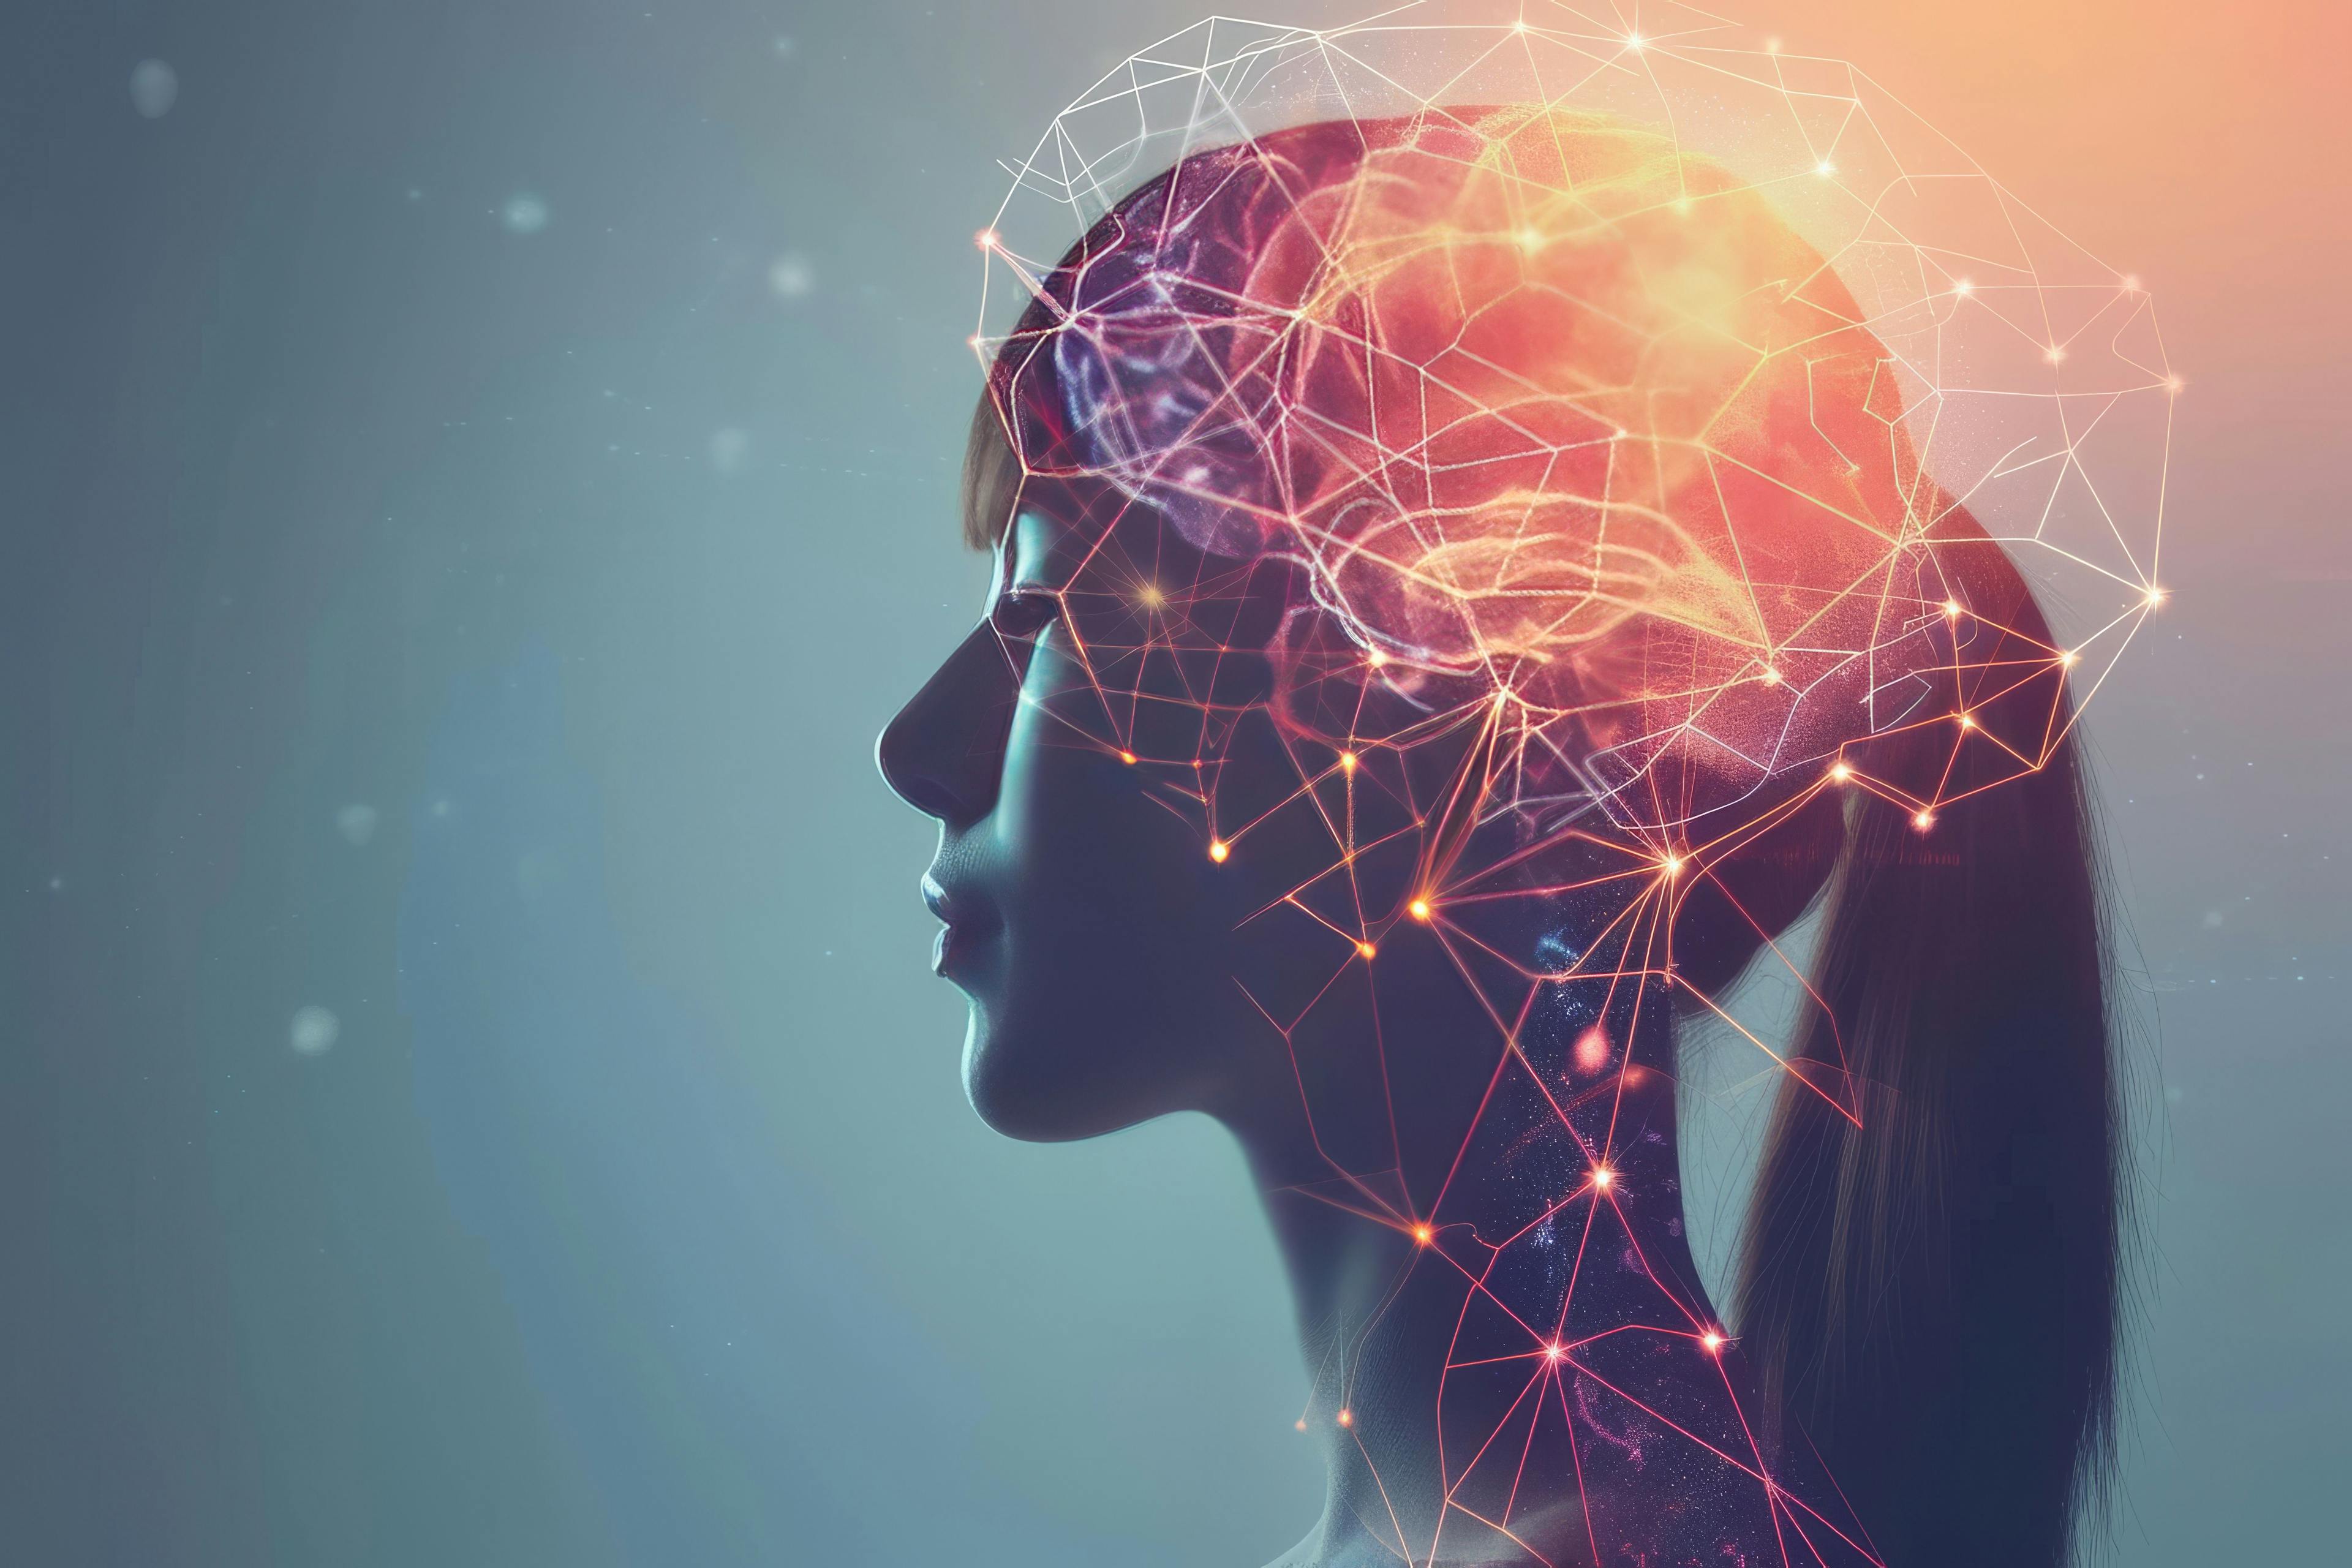 AI Brain Chip neurocomputing. Artificial Intelligence optimization mind brainwave regulation axon. Semiconductor application specific integrated circuit circuit board epilepsy | Image Credit: © Leo - stock.adobe.com